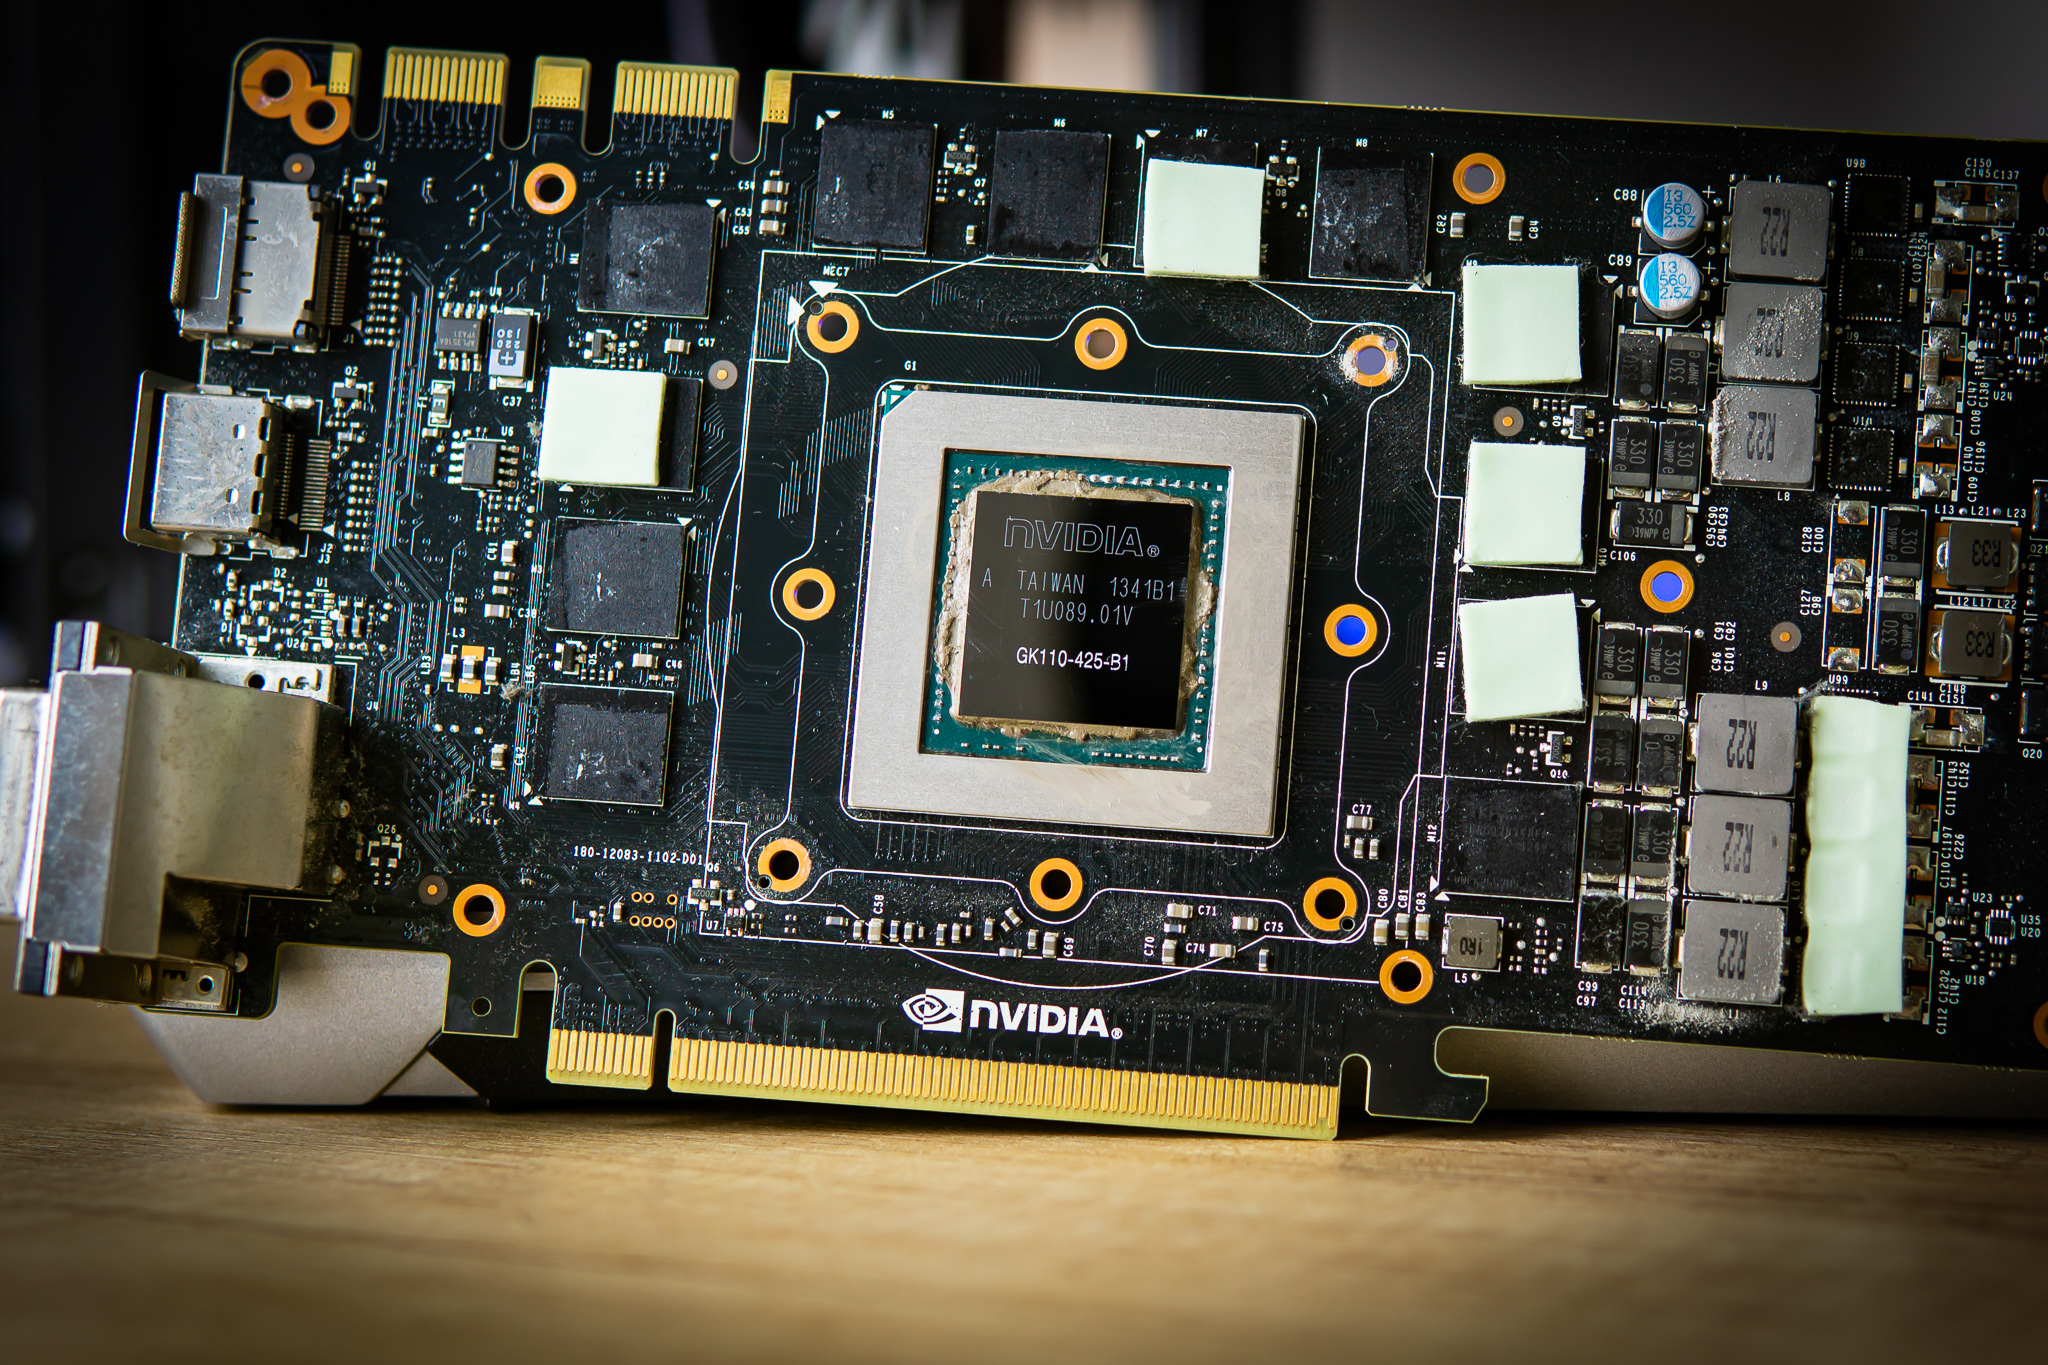 Núcleo da GPU Nvidia.